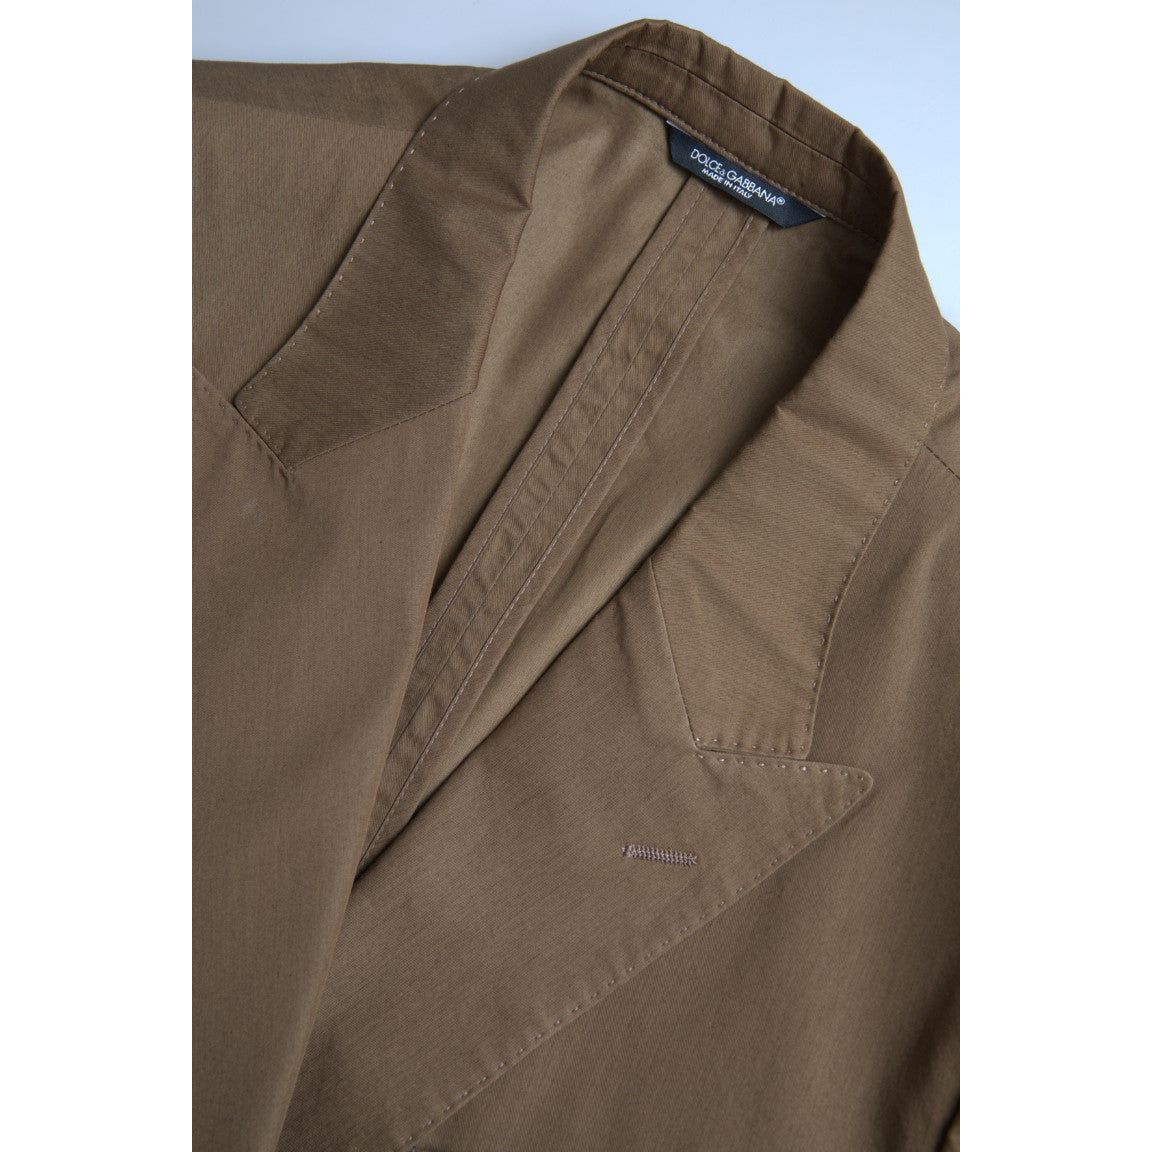 Dolce & Gabbana Elegant Brown Silk Blend Taormina Suit brown-2-piece-single-breasted-taormina-suit 465A8687-Medium-dd007b49-48b.jpg